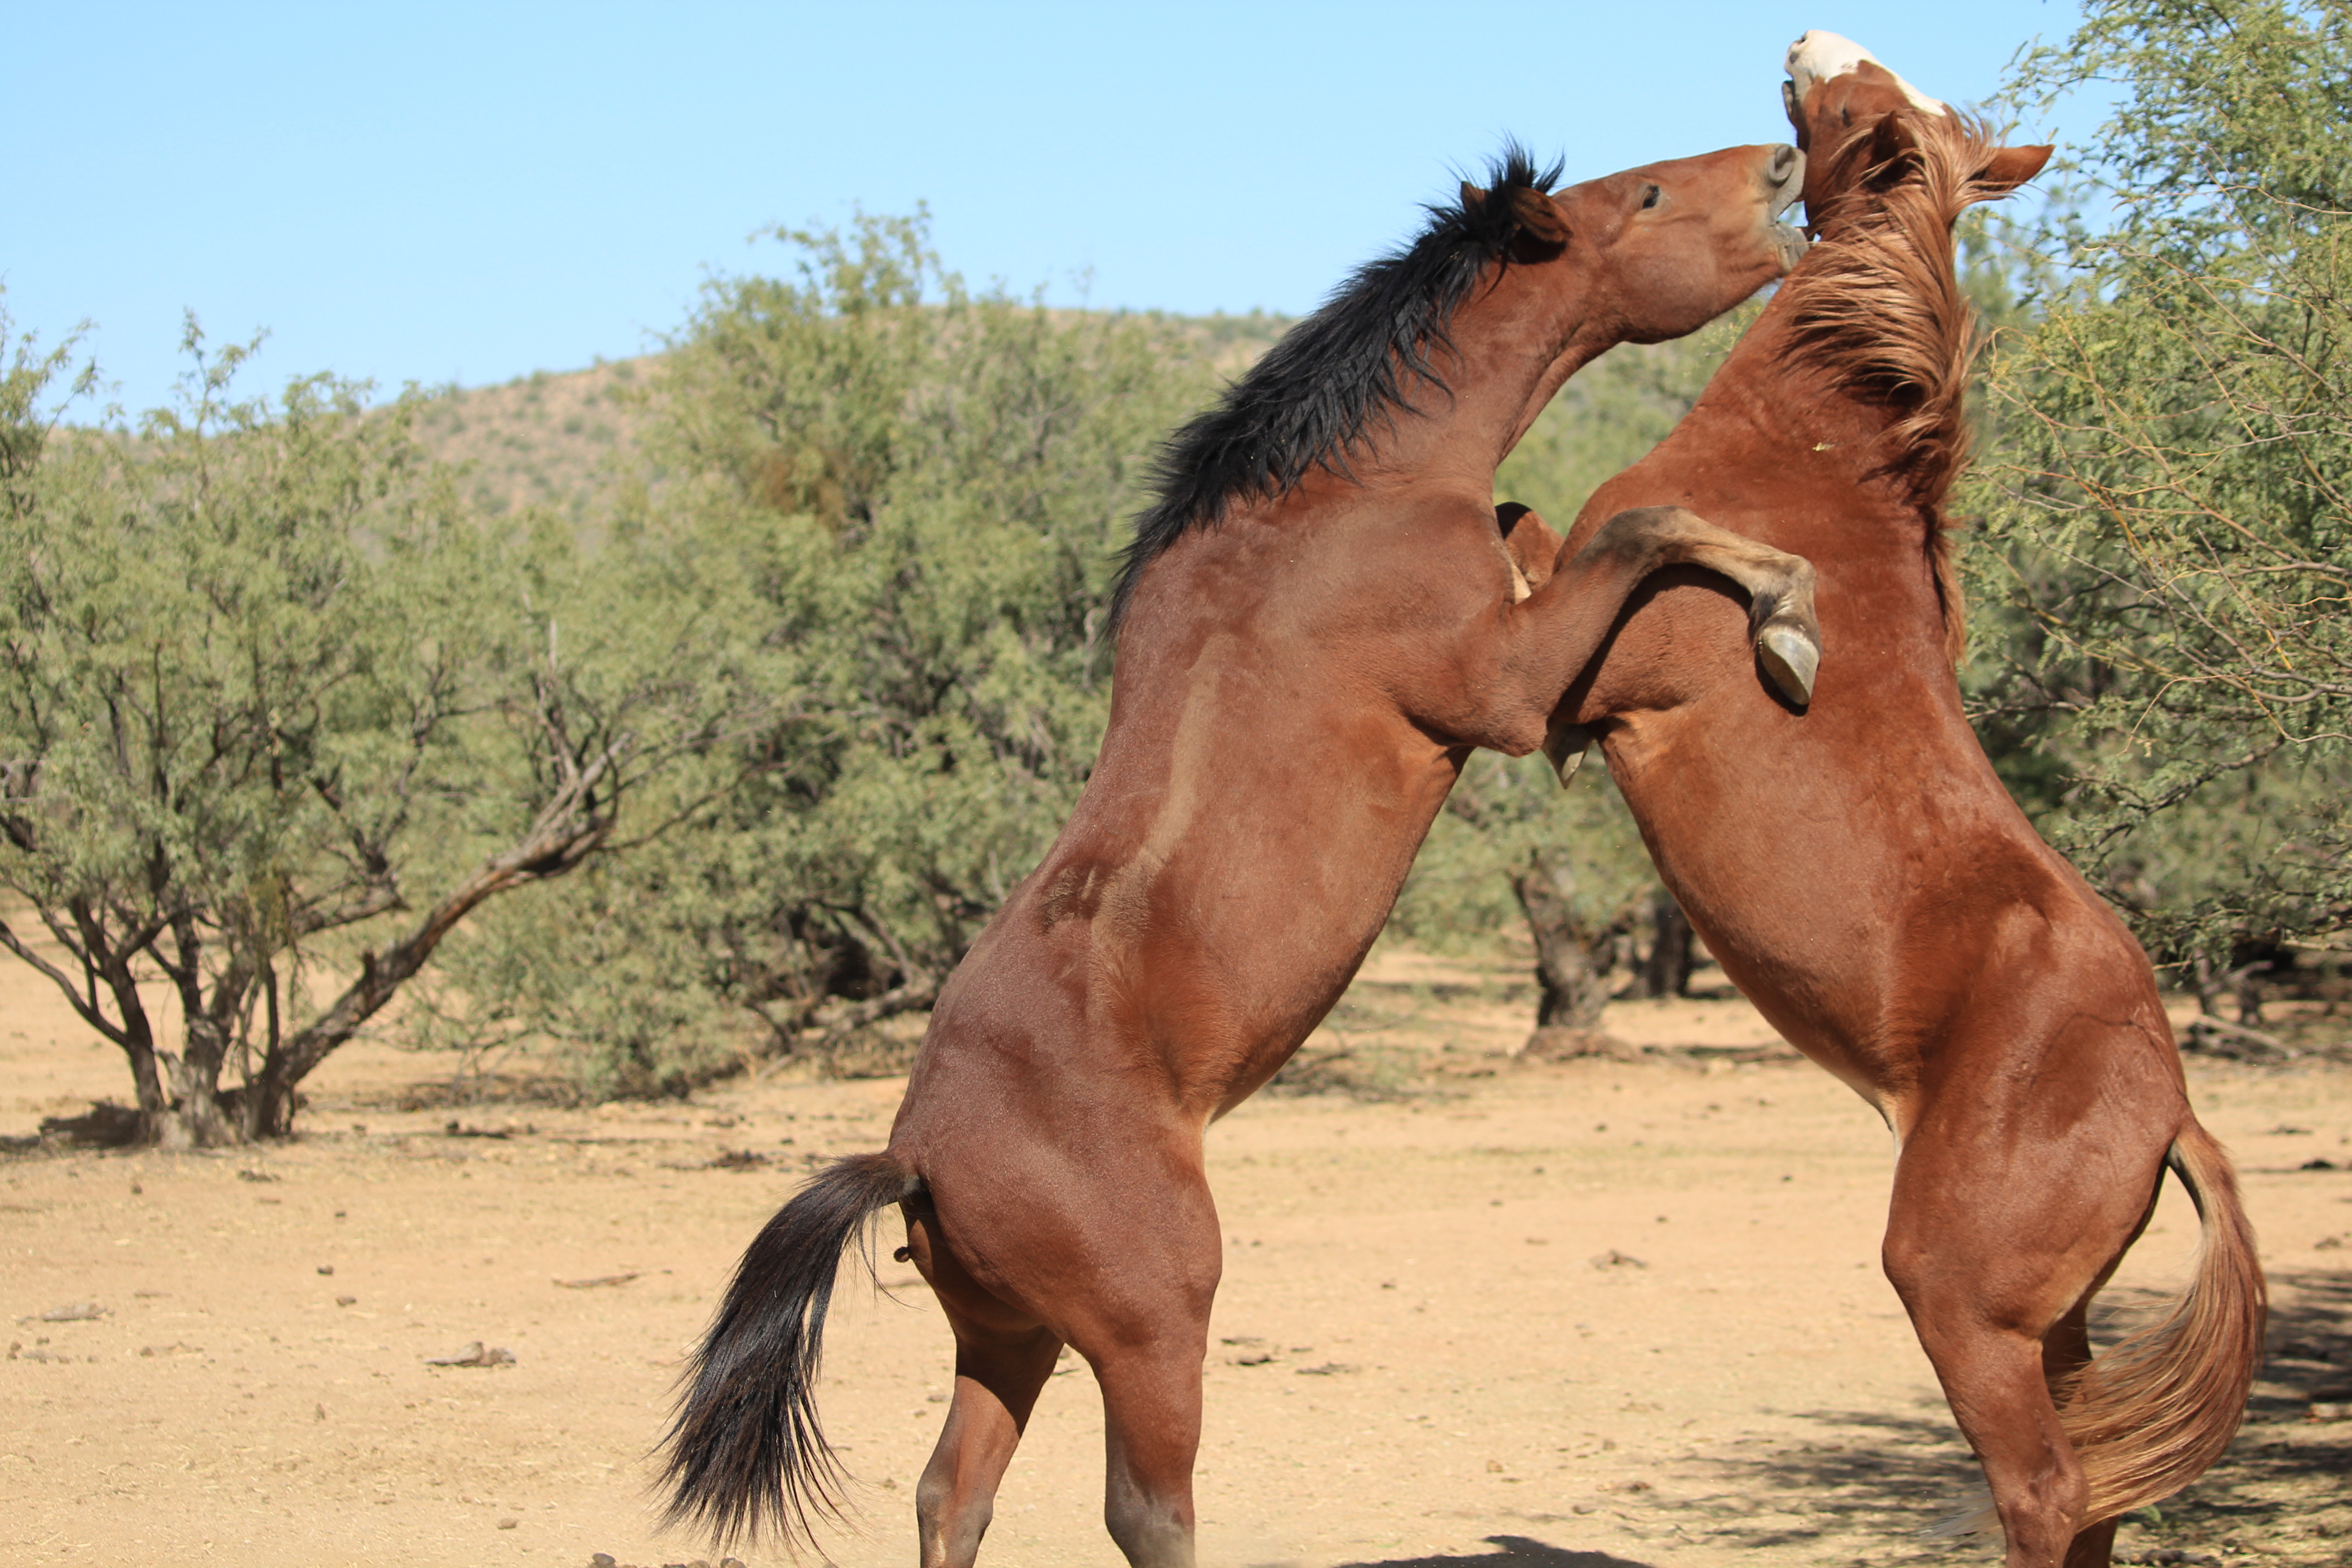 horses scuffling in the wild, mesa arizona wildlife photography